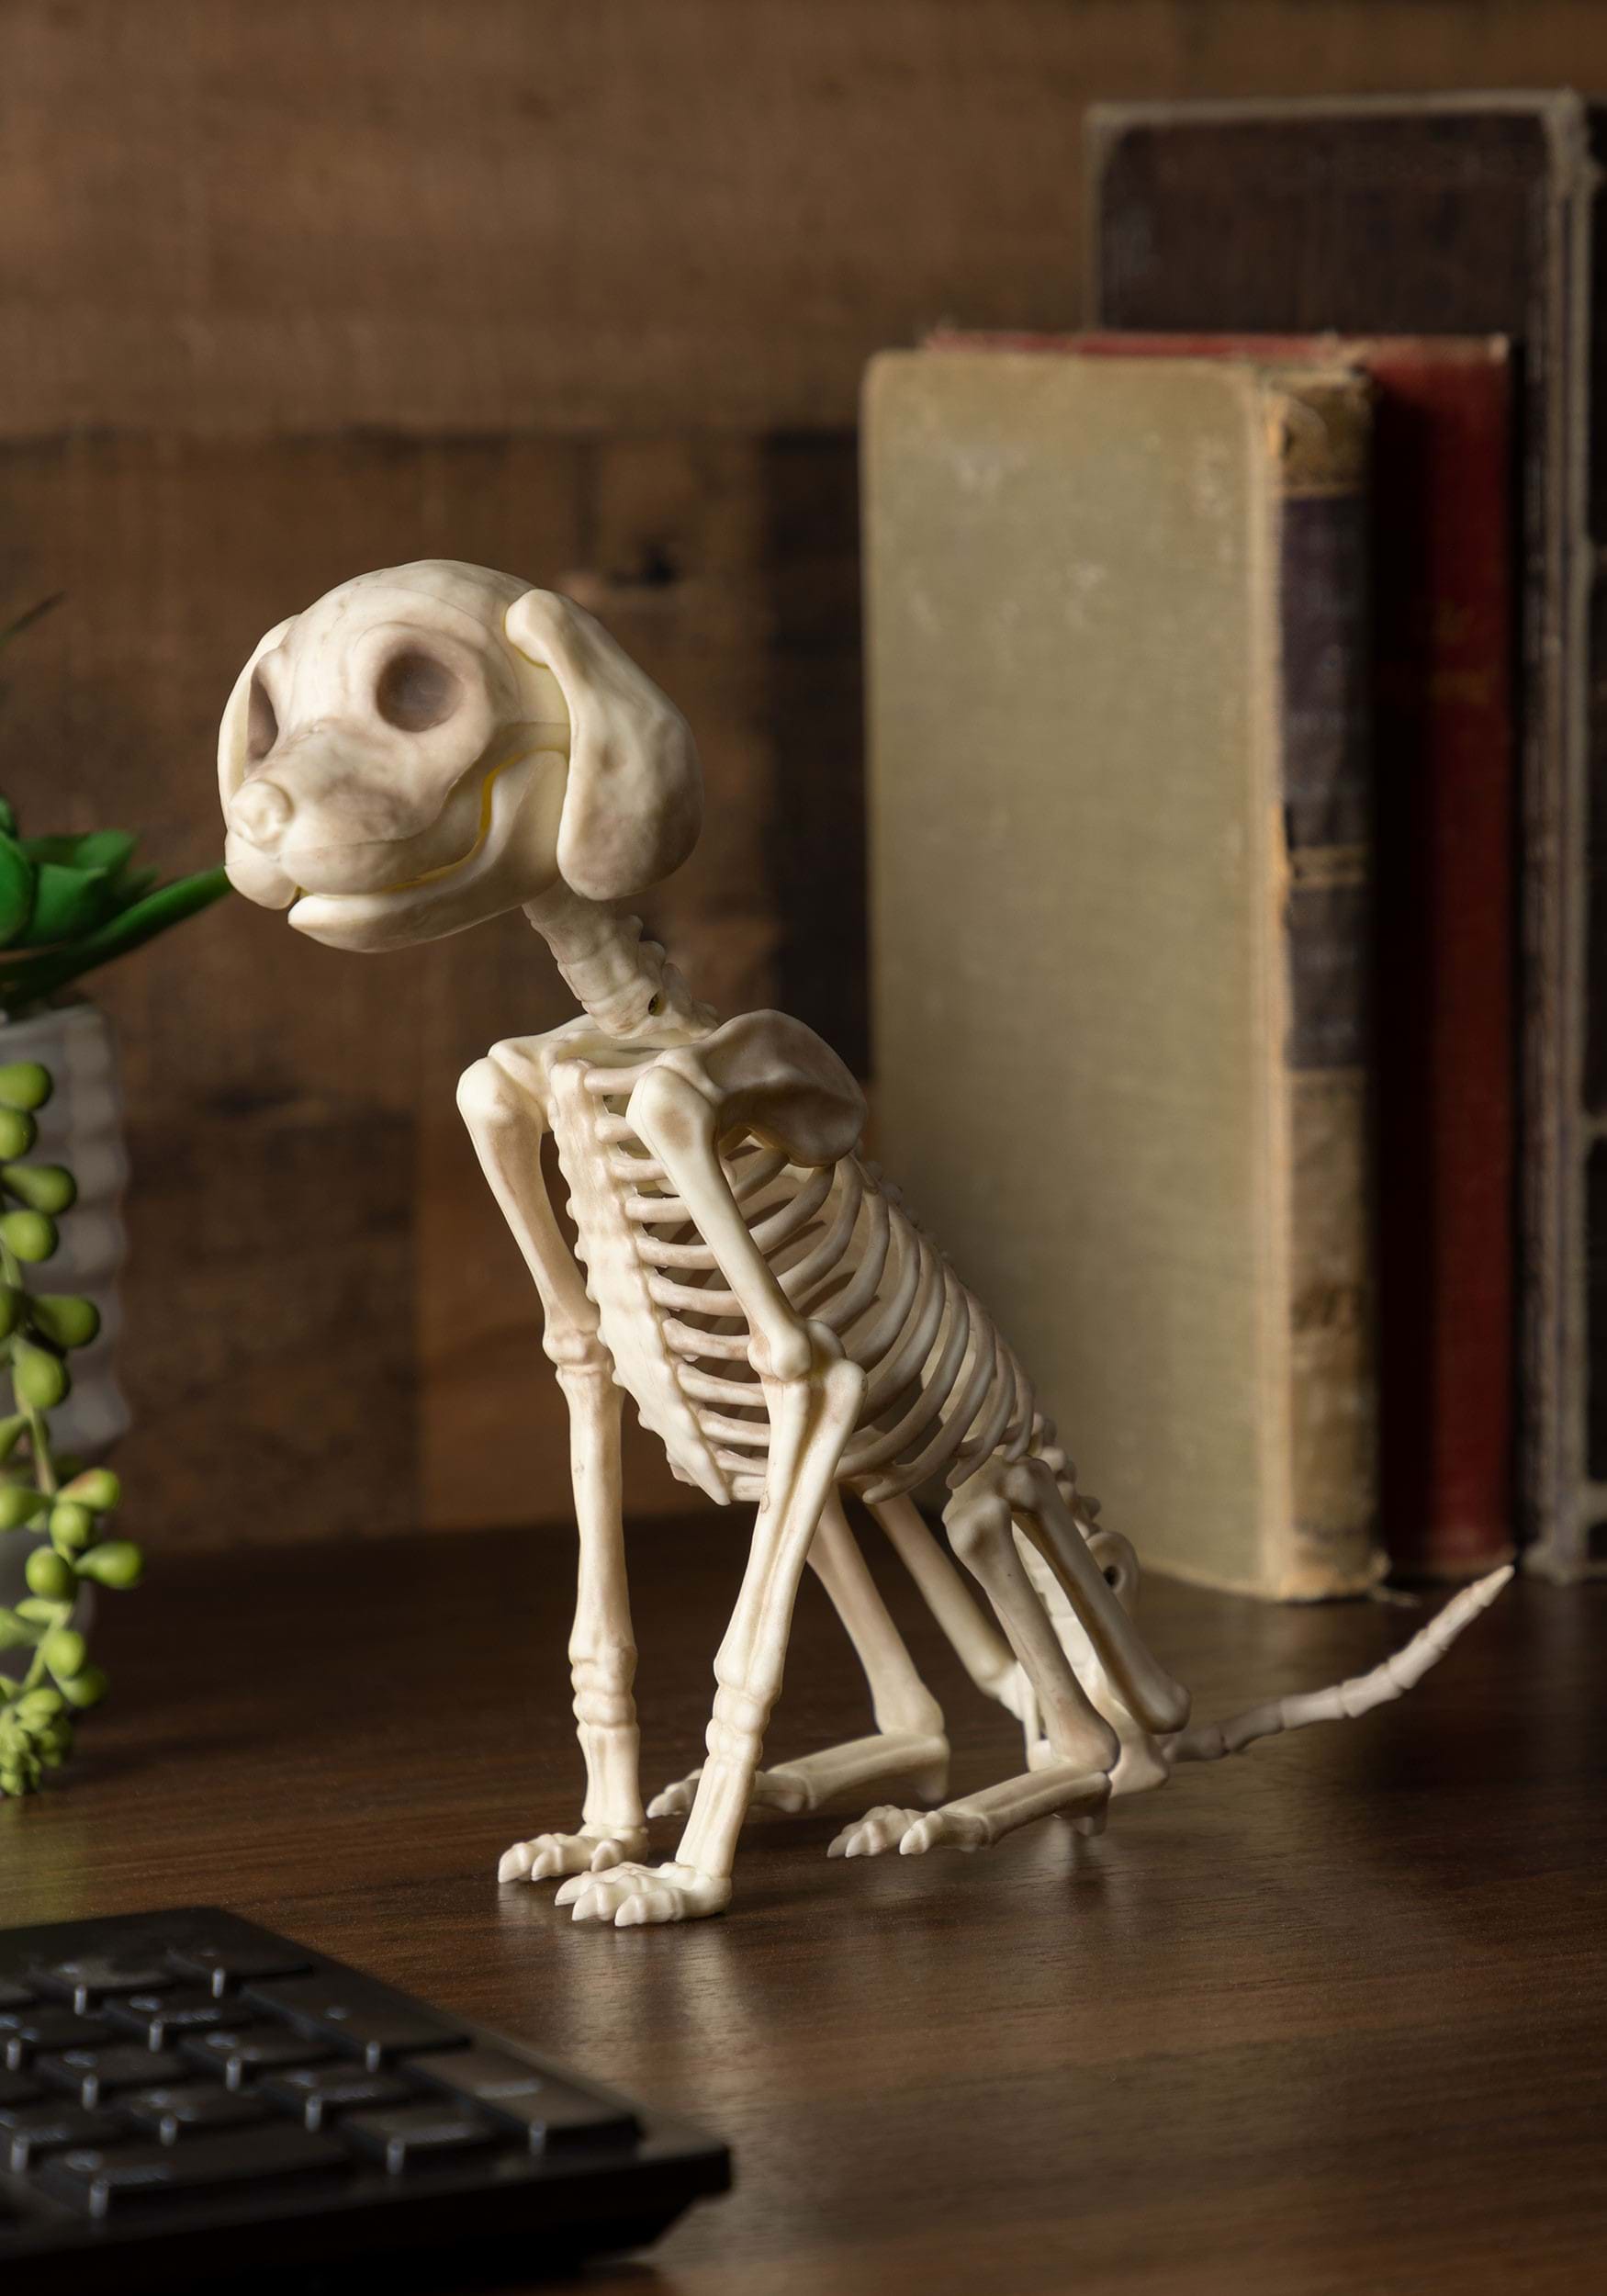 7.5 Inch Sitting Puppy Skeleton Decoration